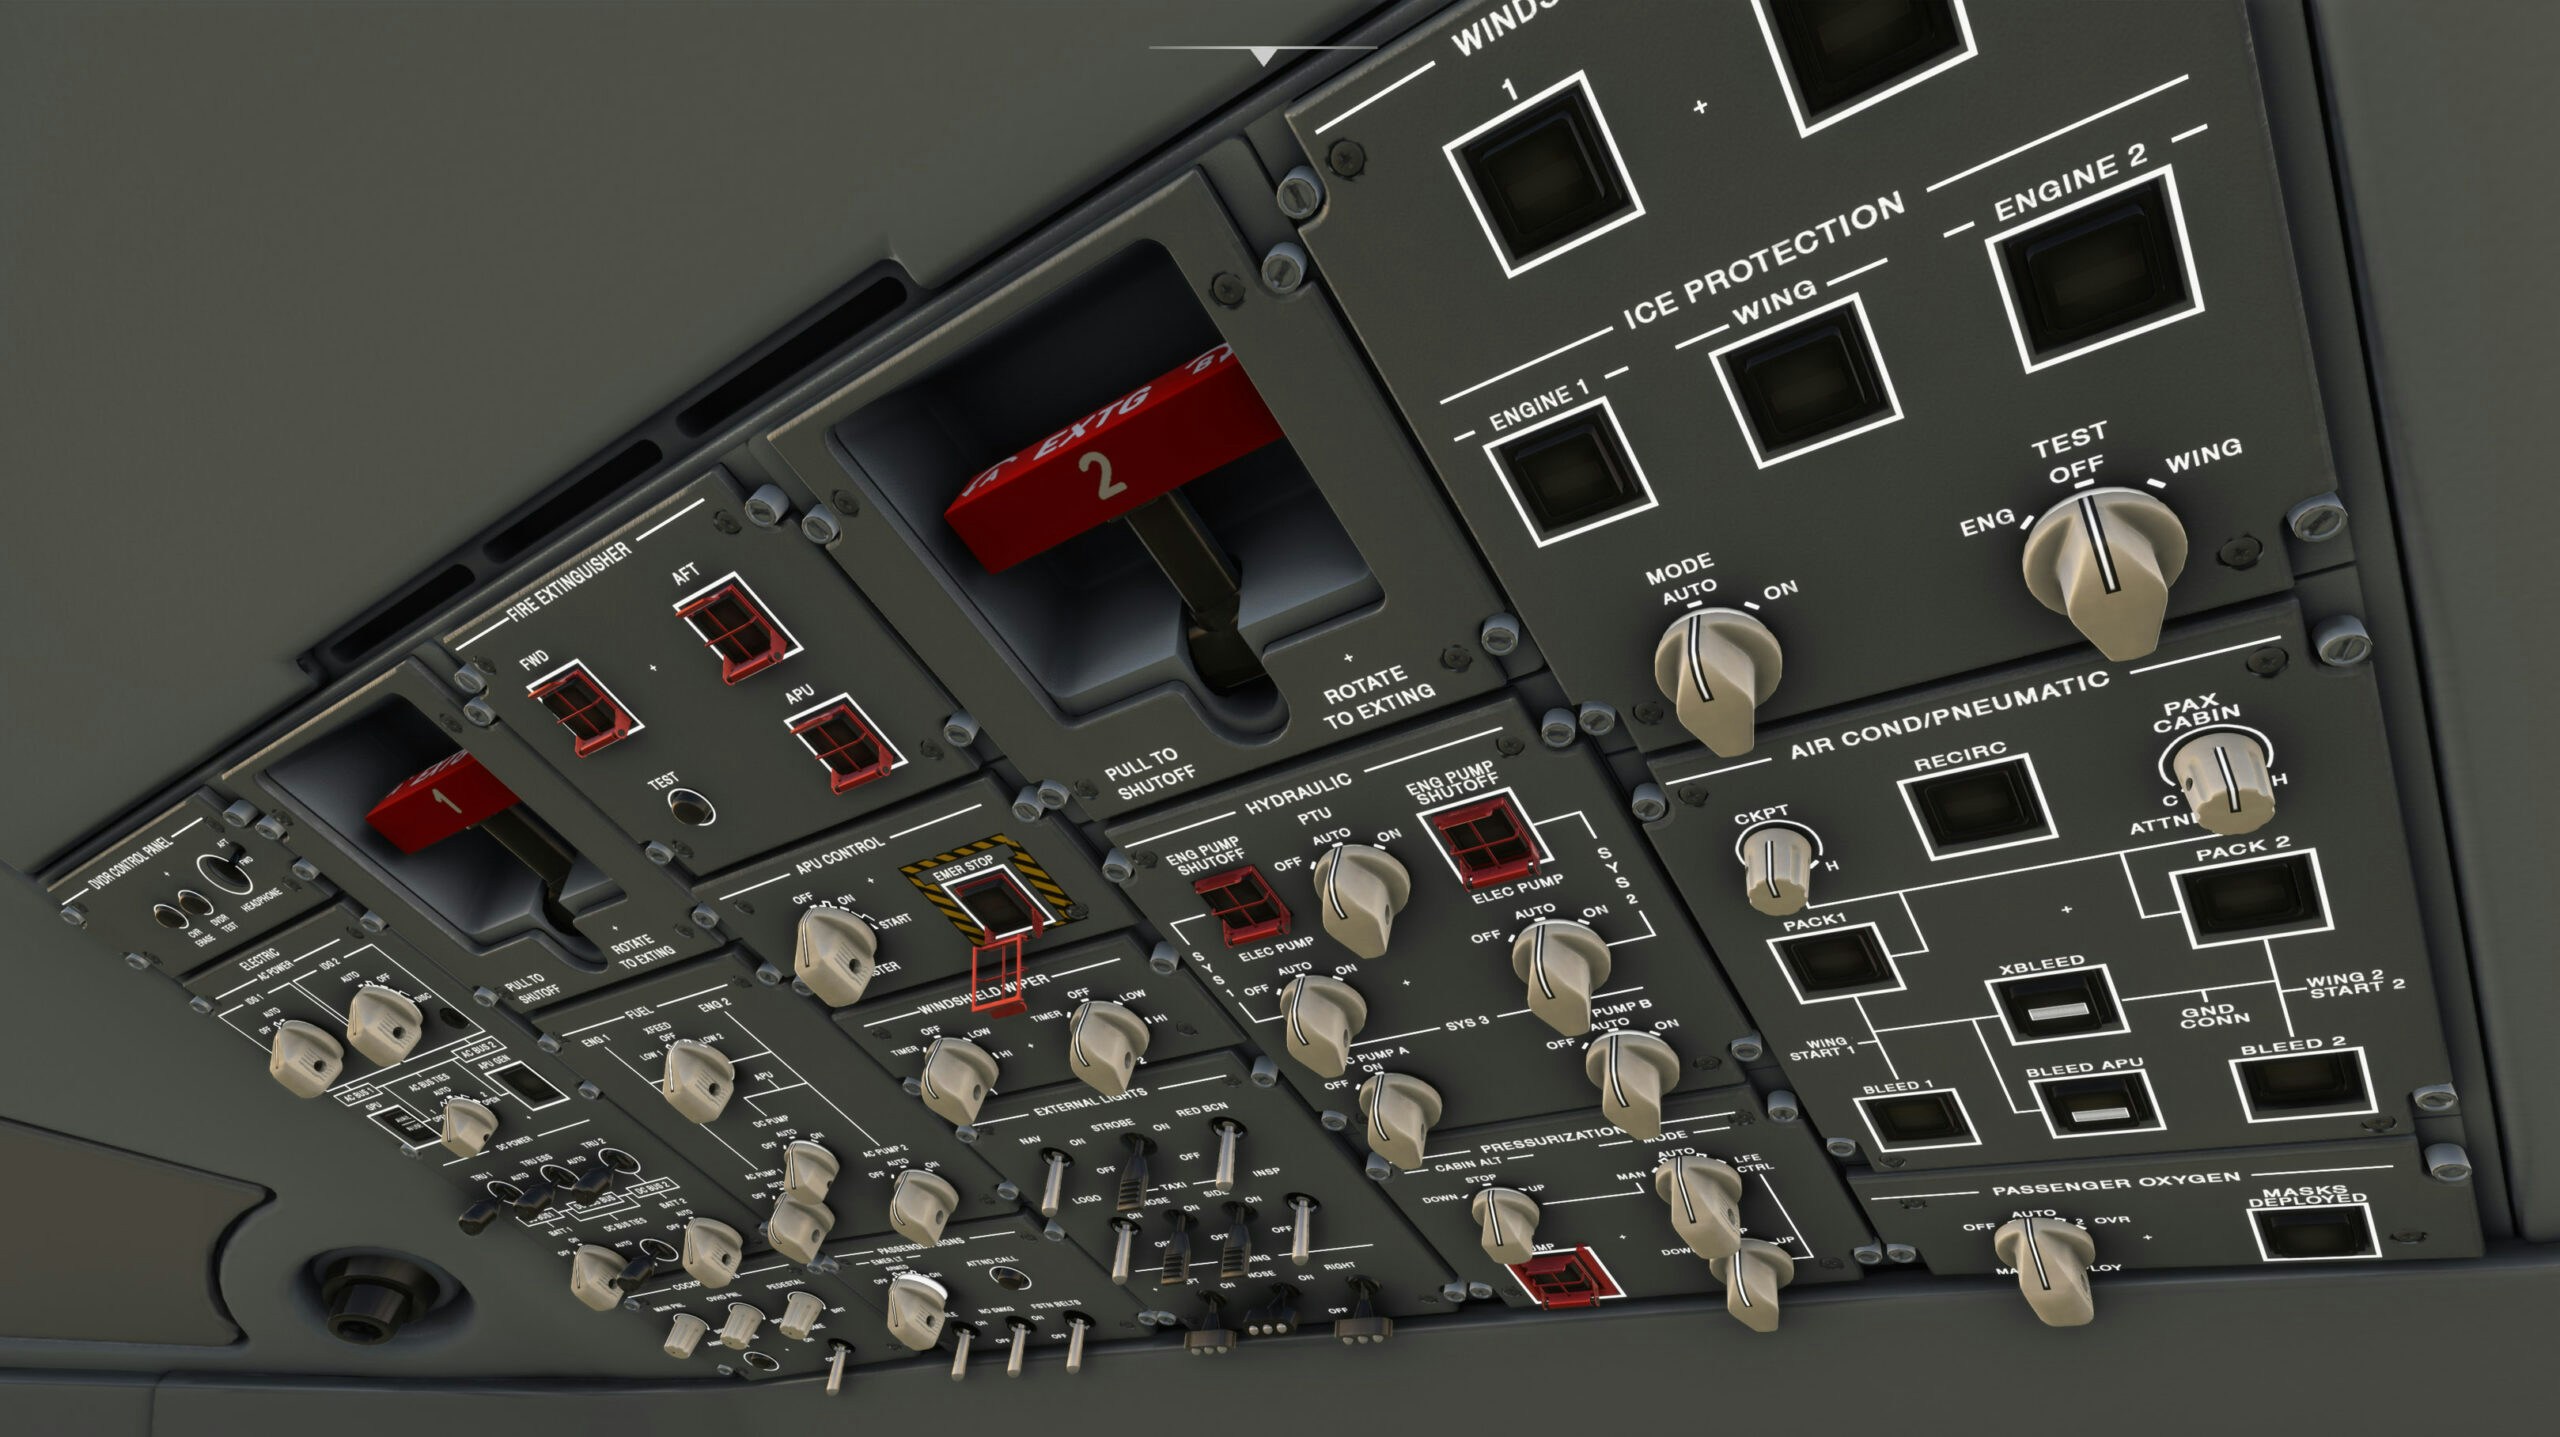 FlightSim Studio Releases E-Jets 175 for MSFS